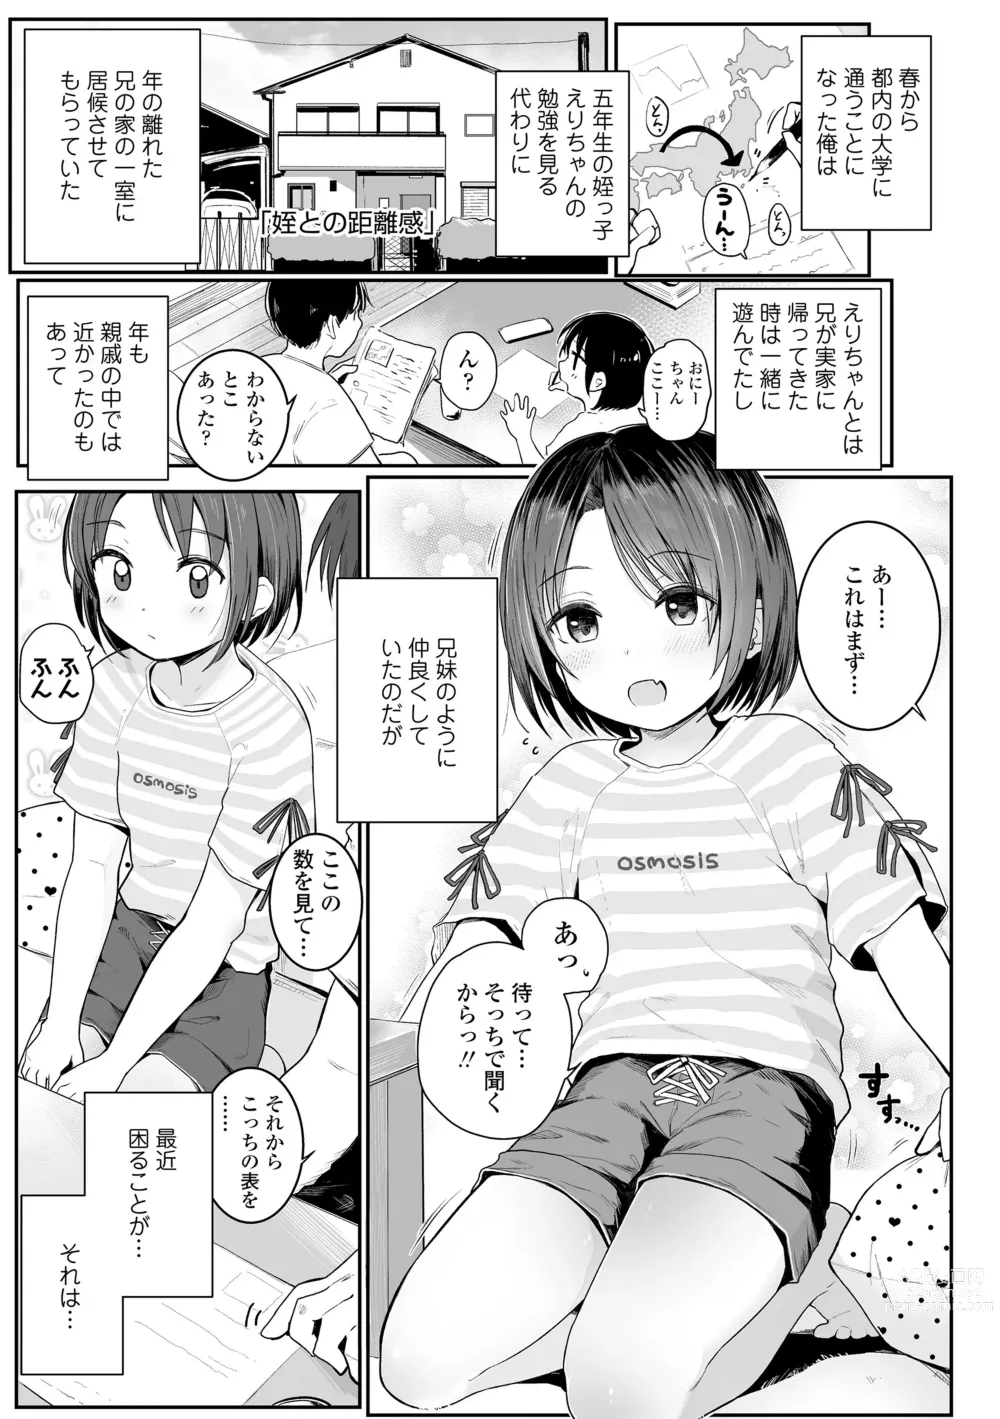 Page 5 of manga Chiisai Houga H Desho